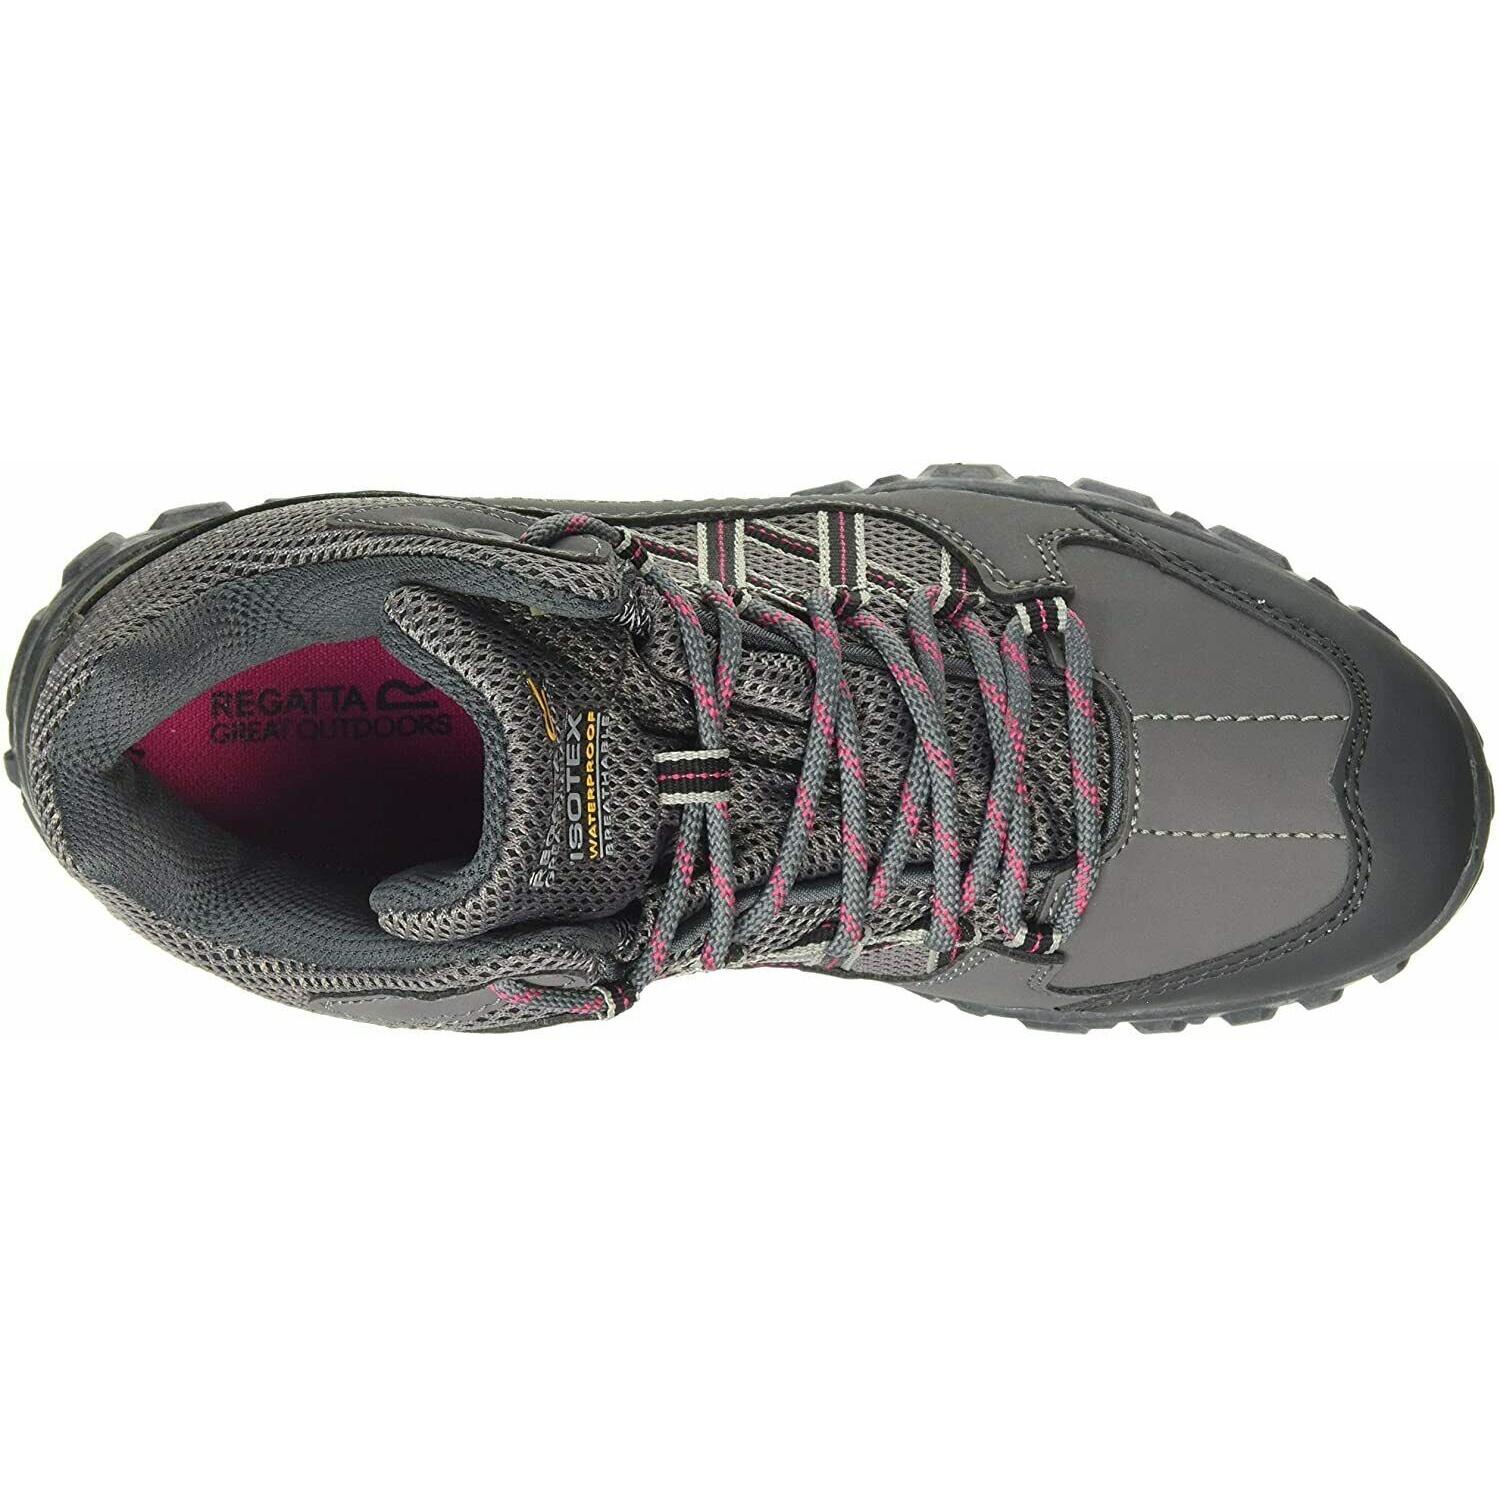 Womens/Ladies Edgepoint Waterproof Walking Boots (Granite/Duchess) 4/5